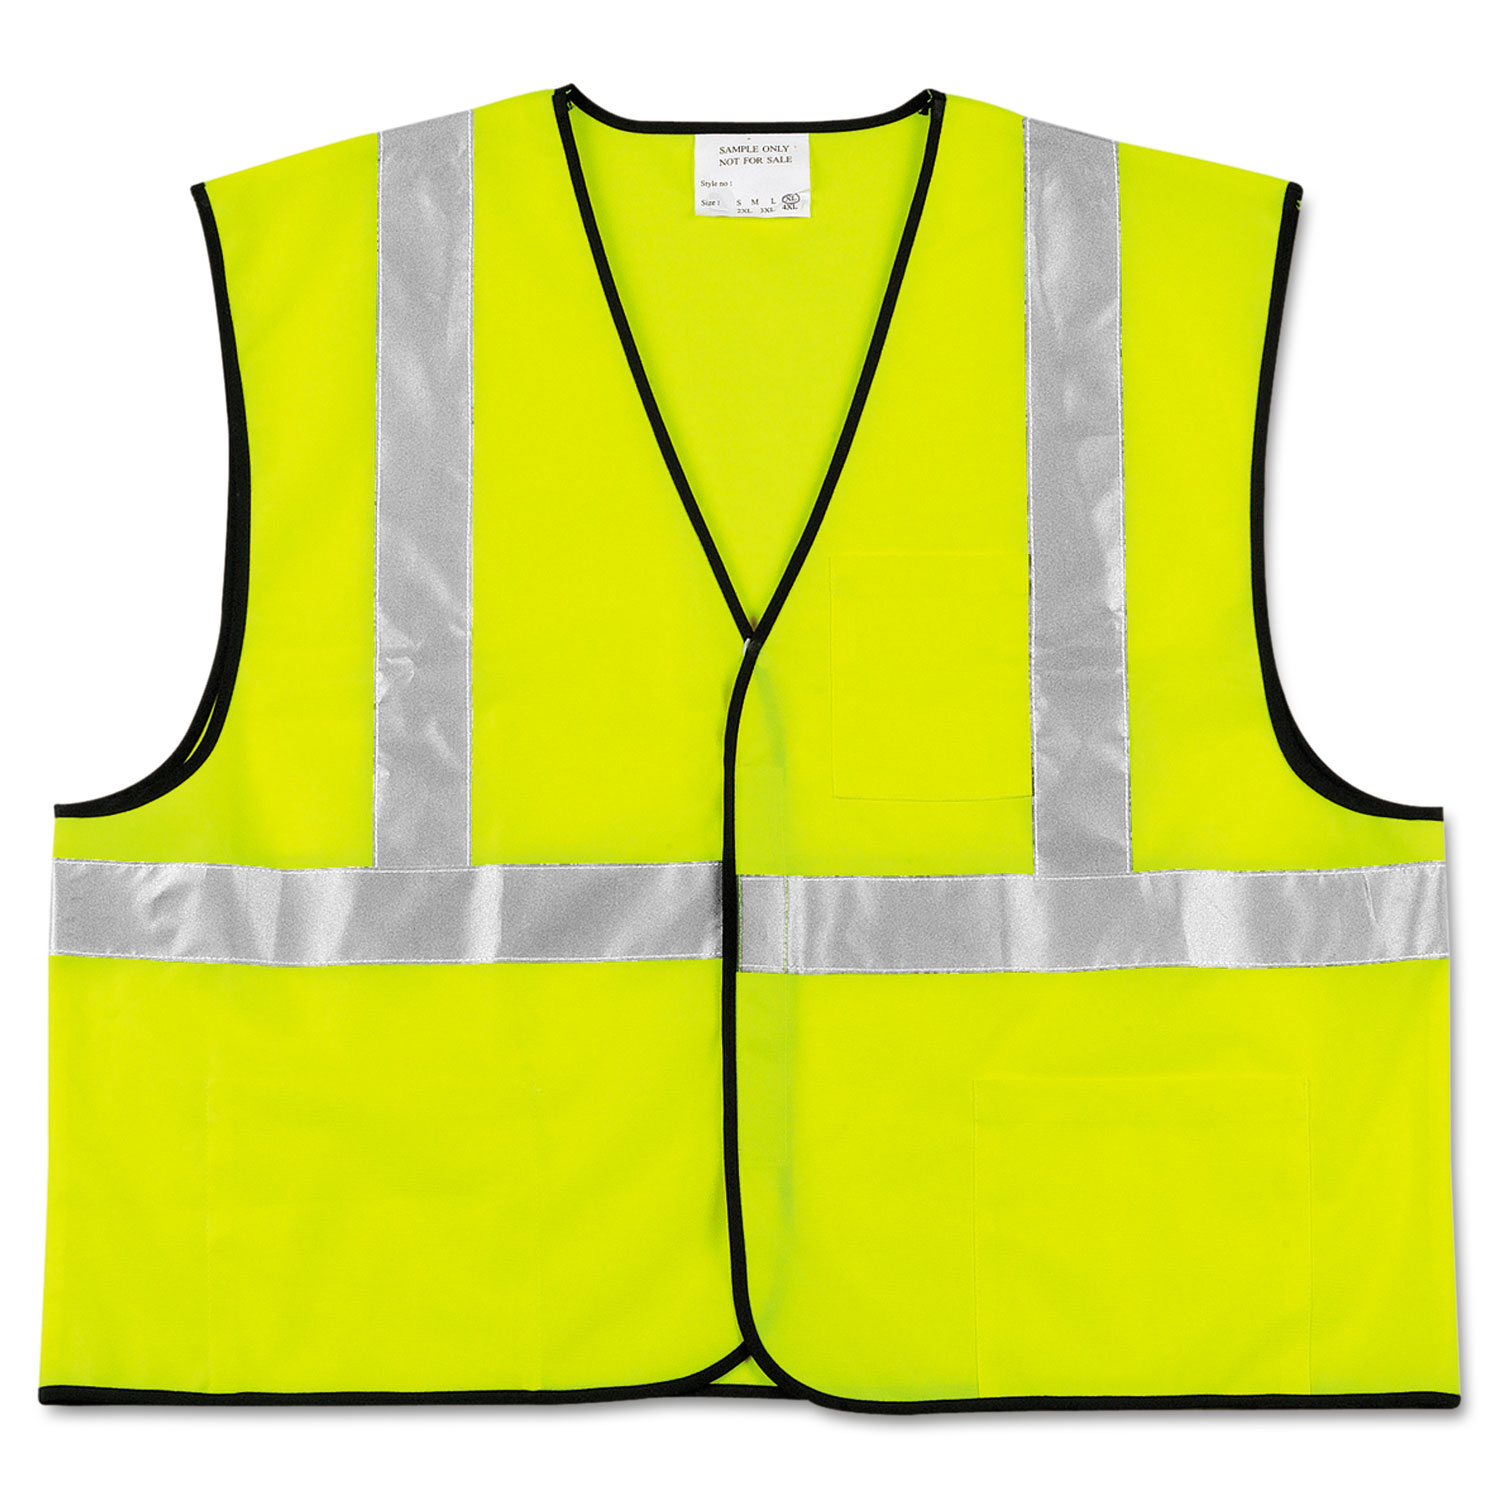  MCR Safety VCL2SLX2 Class 2 Safety Vest, Fluorescent Lime w/Silver Stripe, Polyester, 2X-Large (CRWVCL2SLXL2) 